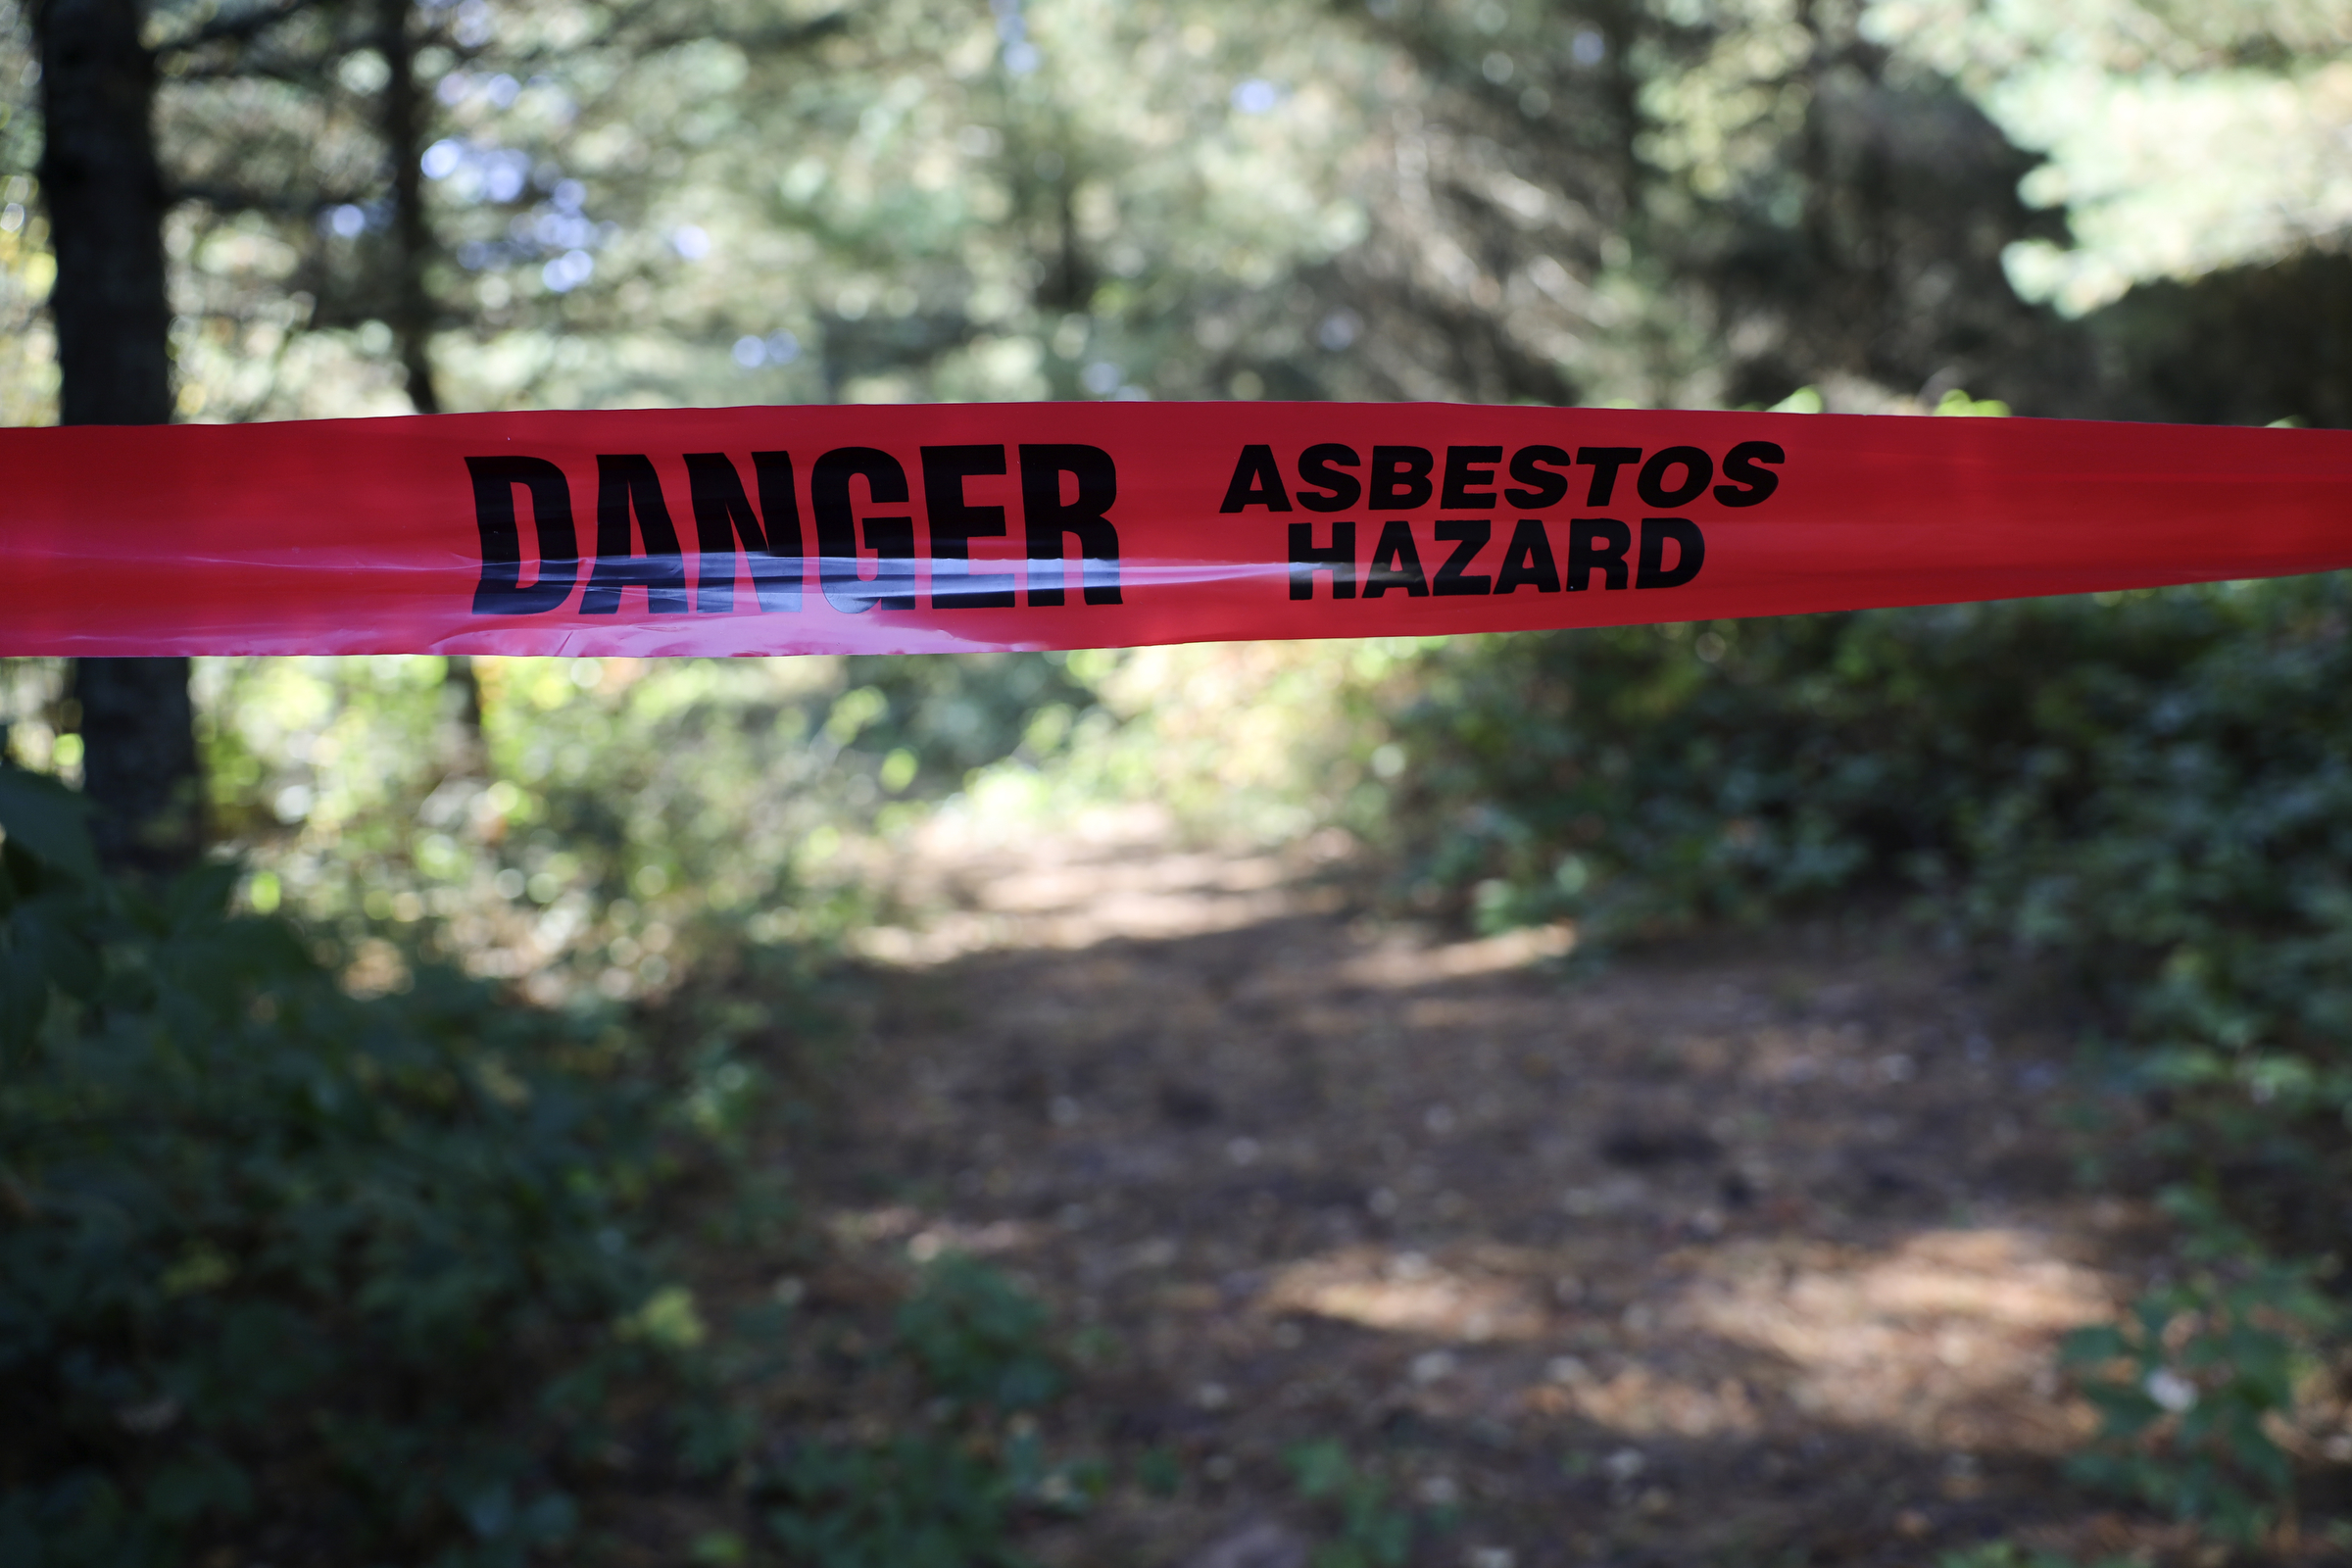 Red caution tape on Zach Skrede's property says 'Danger Asbestos Hazard'